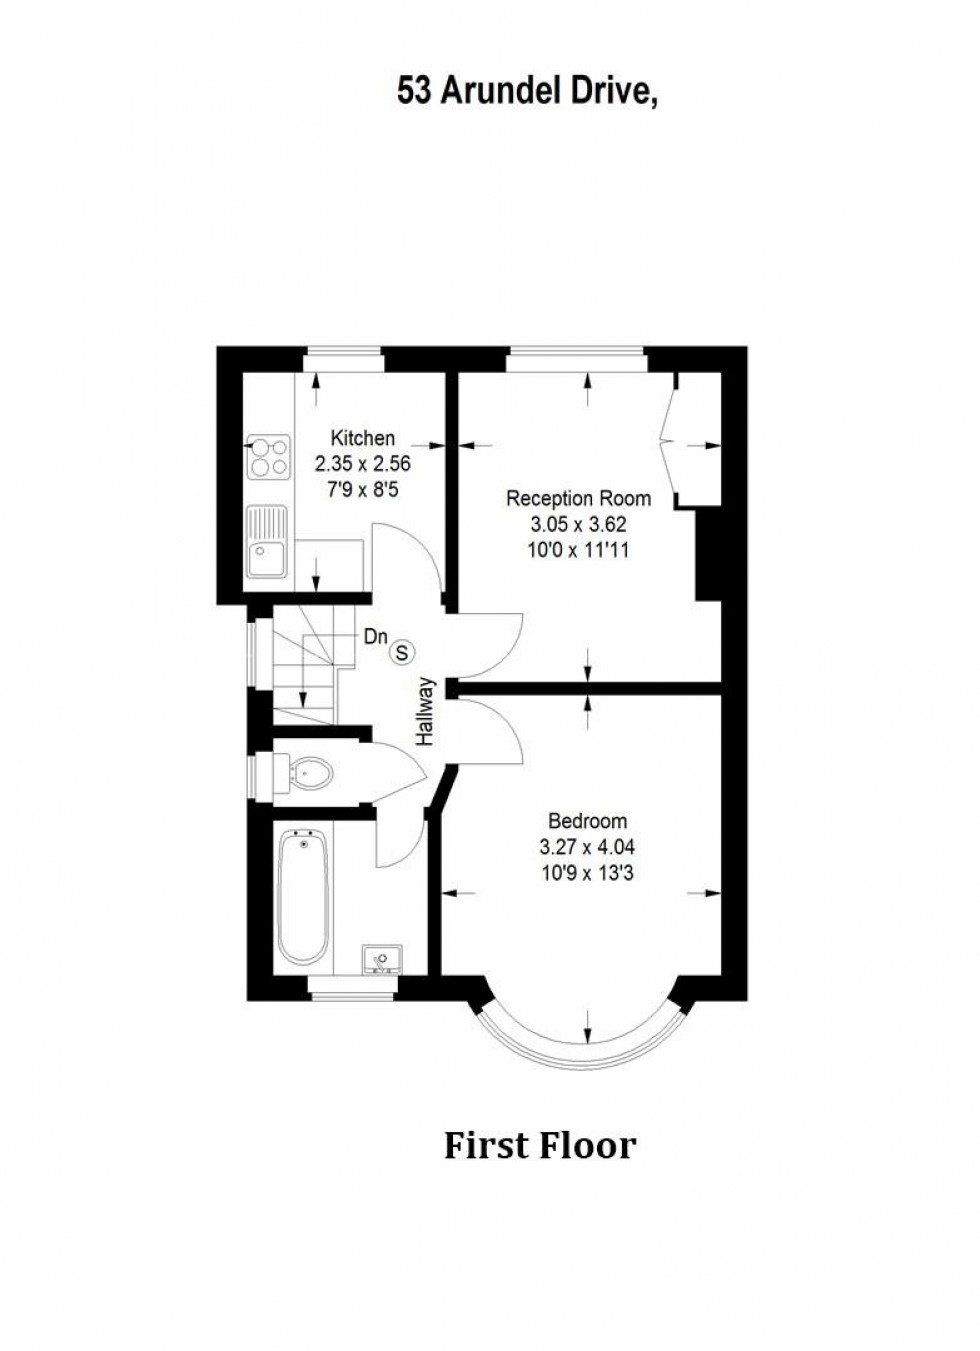 Floorplan for Arundel Drive, Harrow, HA2 8PN